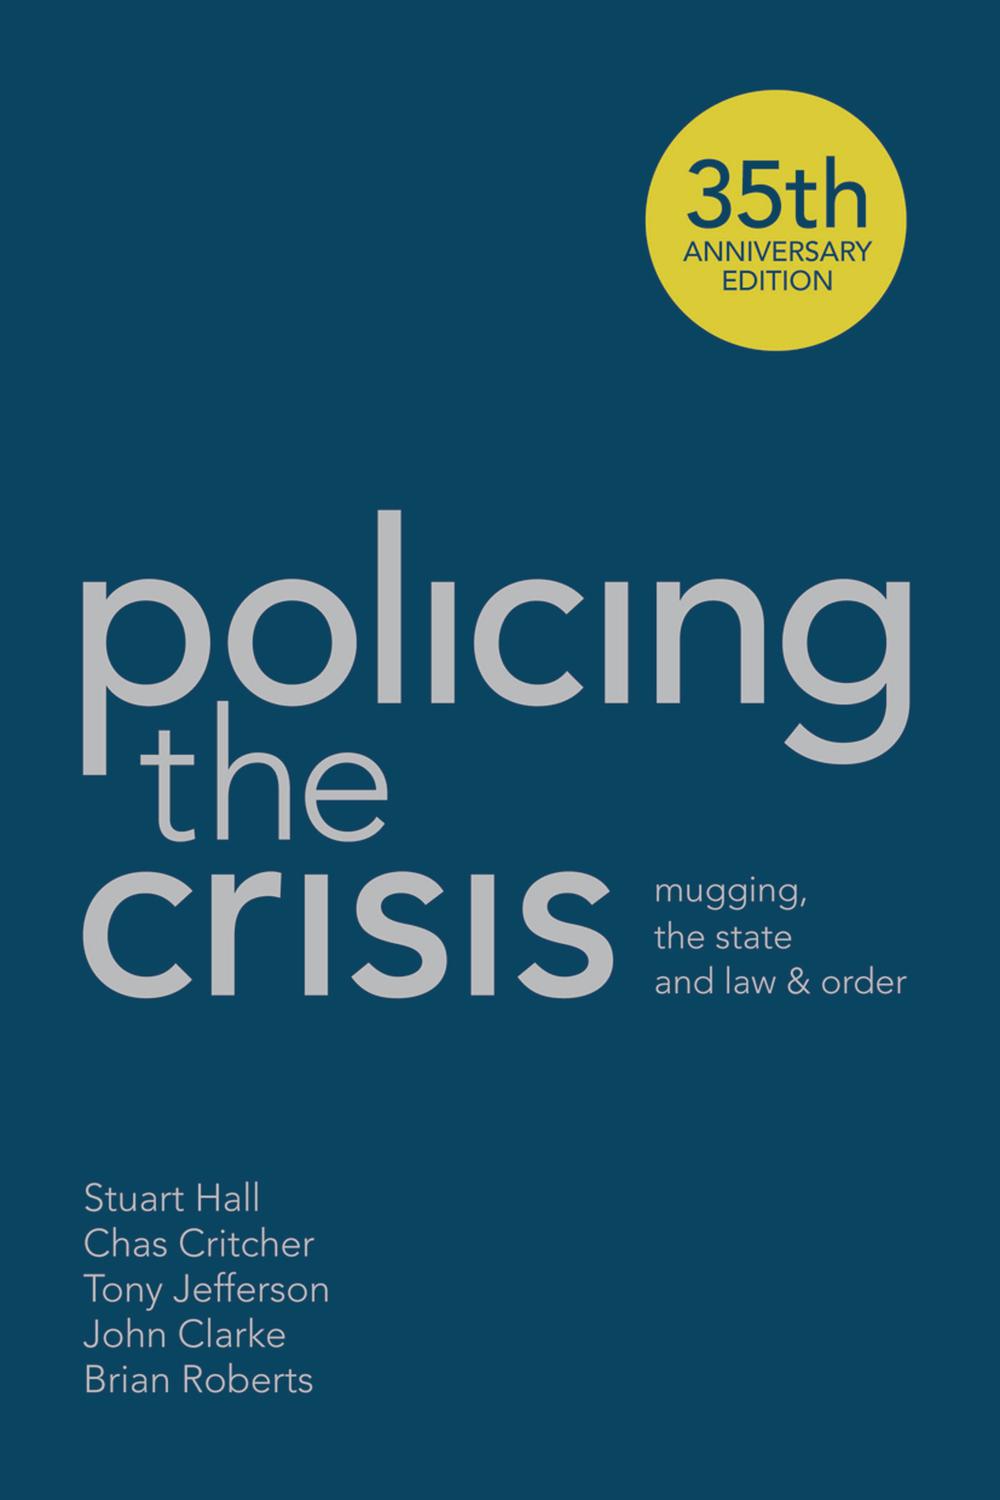 Policing the Crisis - Stuart Hall, Chas Critcher, Tony Jefferson, John Clarke, Brian Roberts